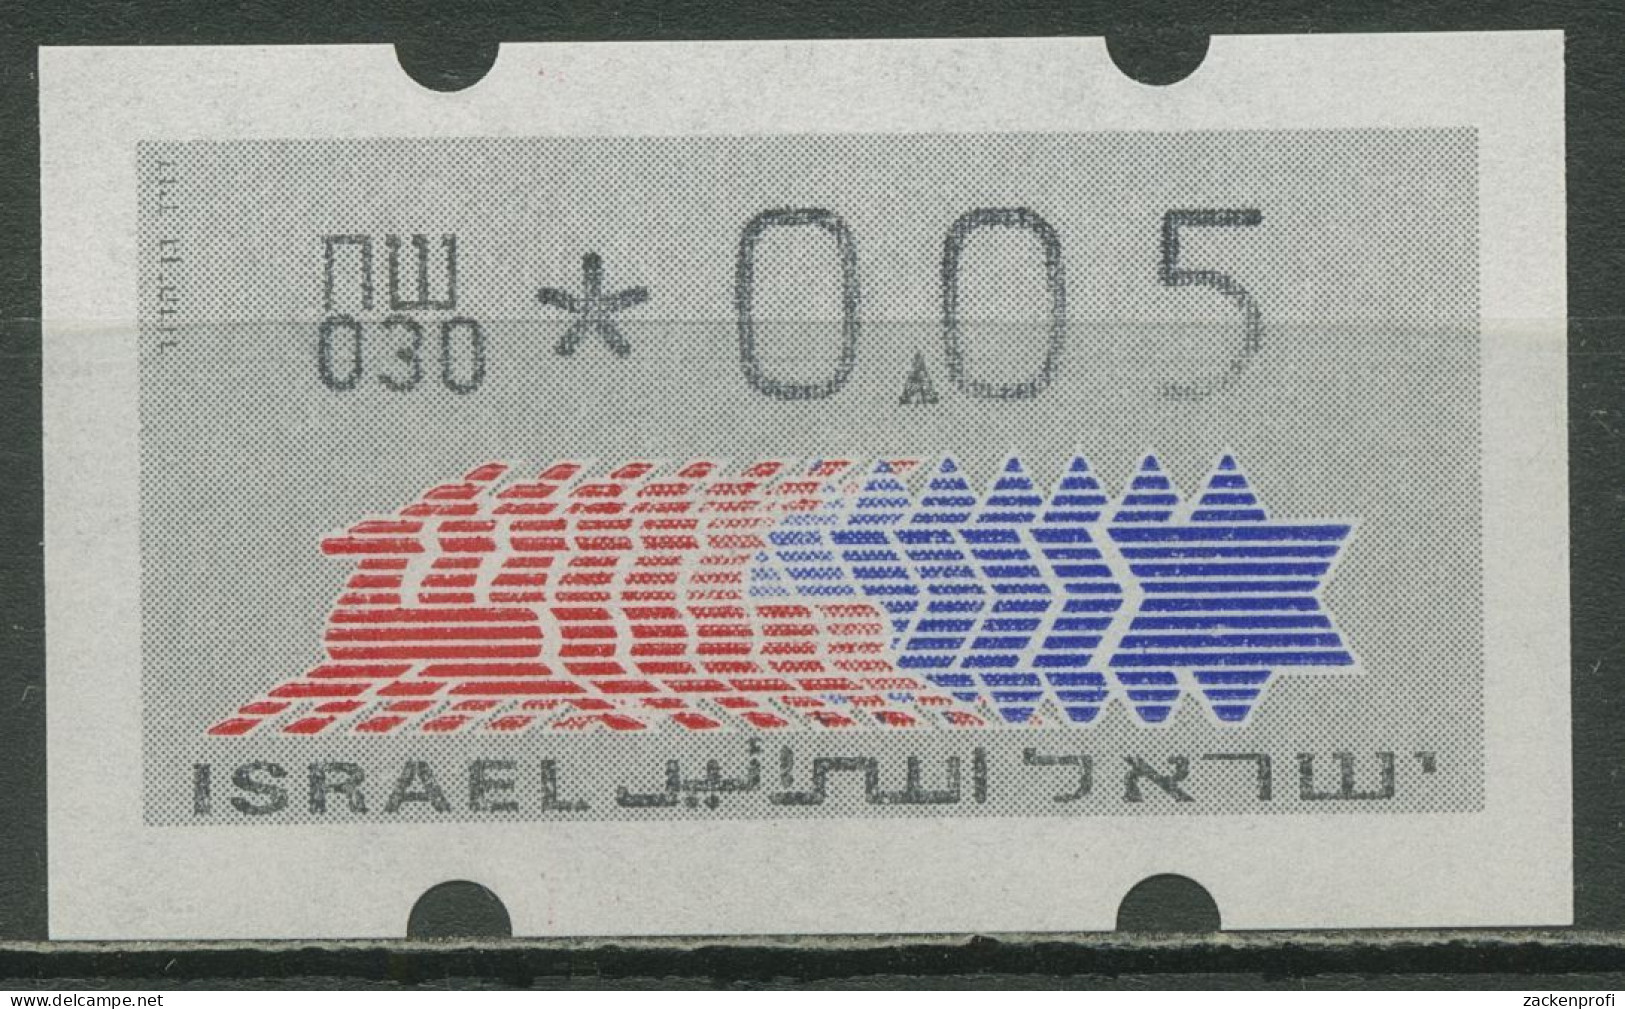 Israel ATM 1990 Hirsch Automat 030 Einzelwert ATM 3.4.30 Postfrisch - Franking Labels